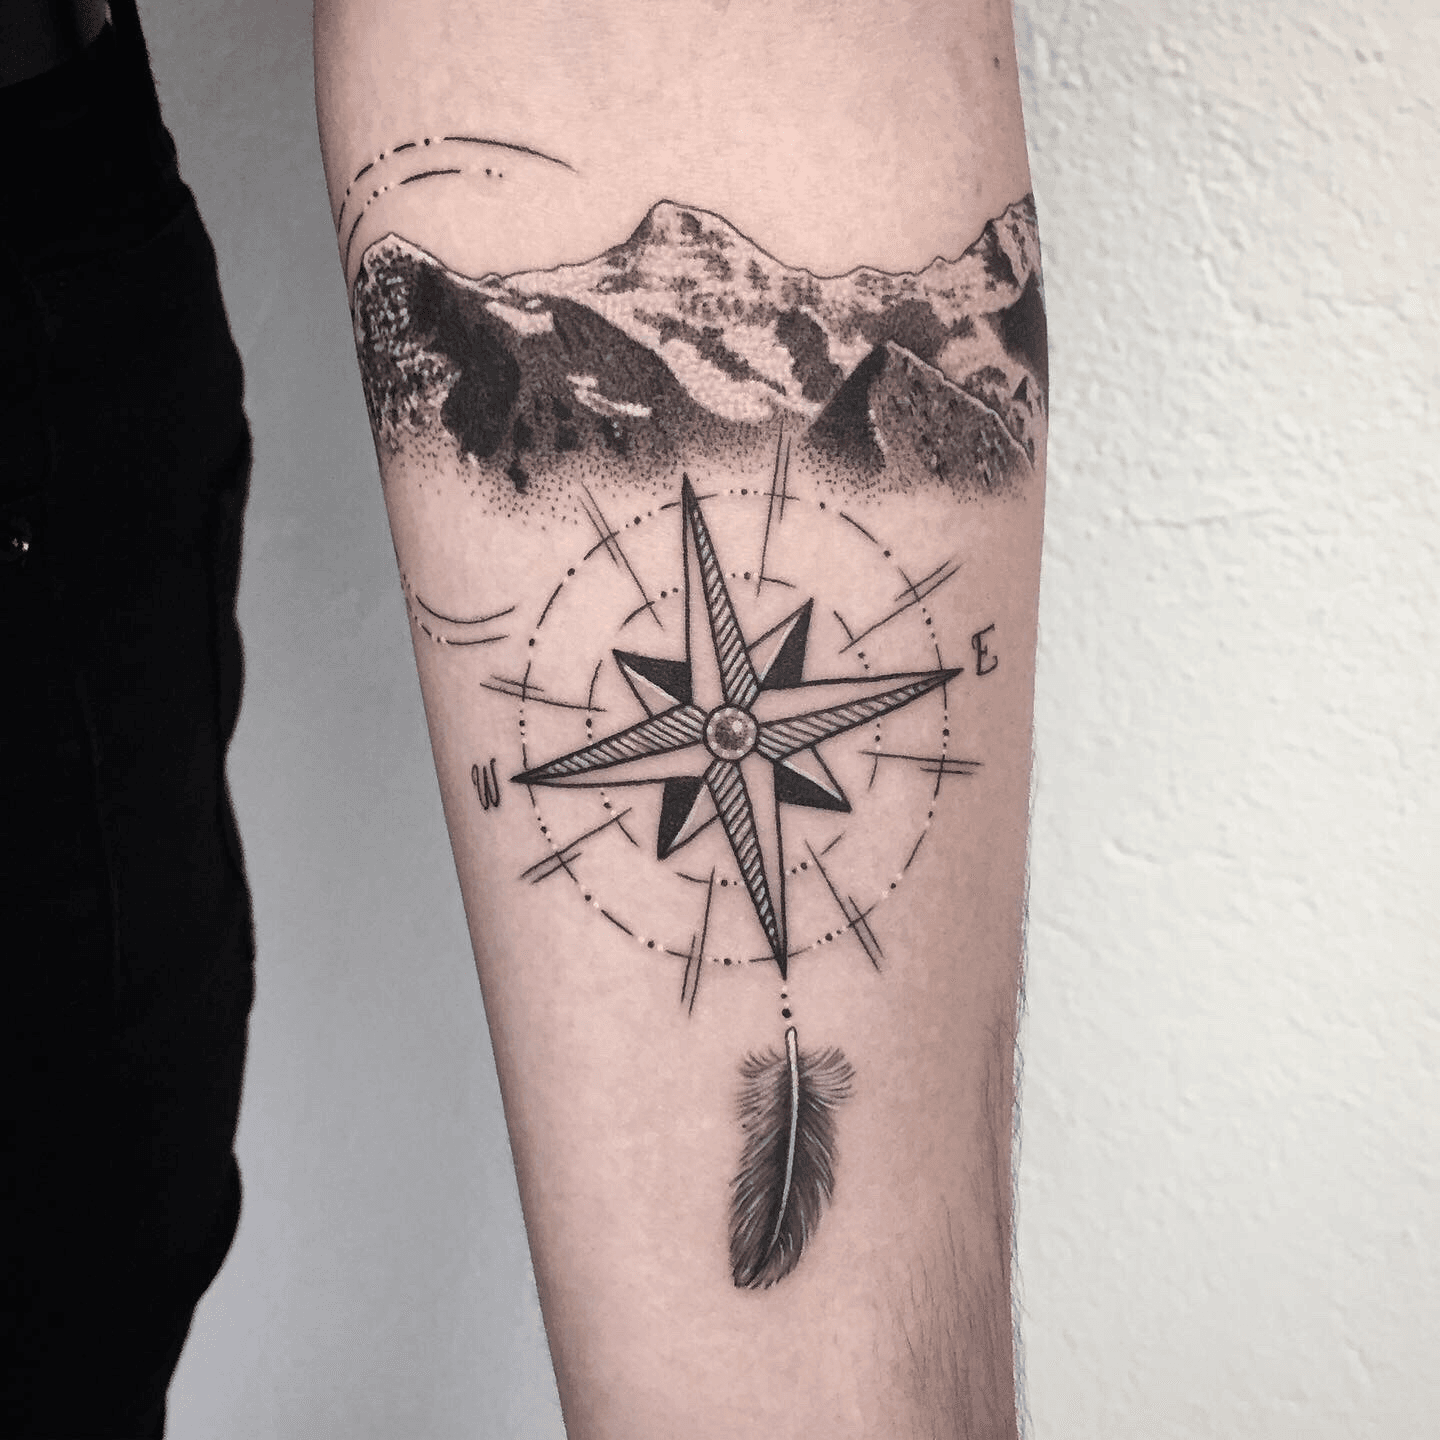 Tattoo uploaded by Orla  Back of shoulder black  grey wanderlust mountains  compass tattoo dreamtattoo mydreamtattoo  Tattoodo